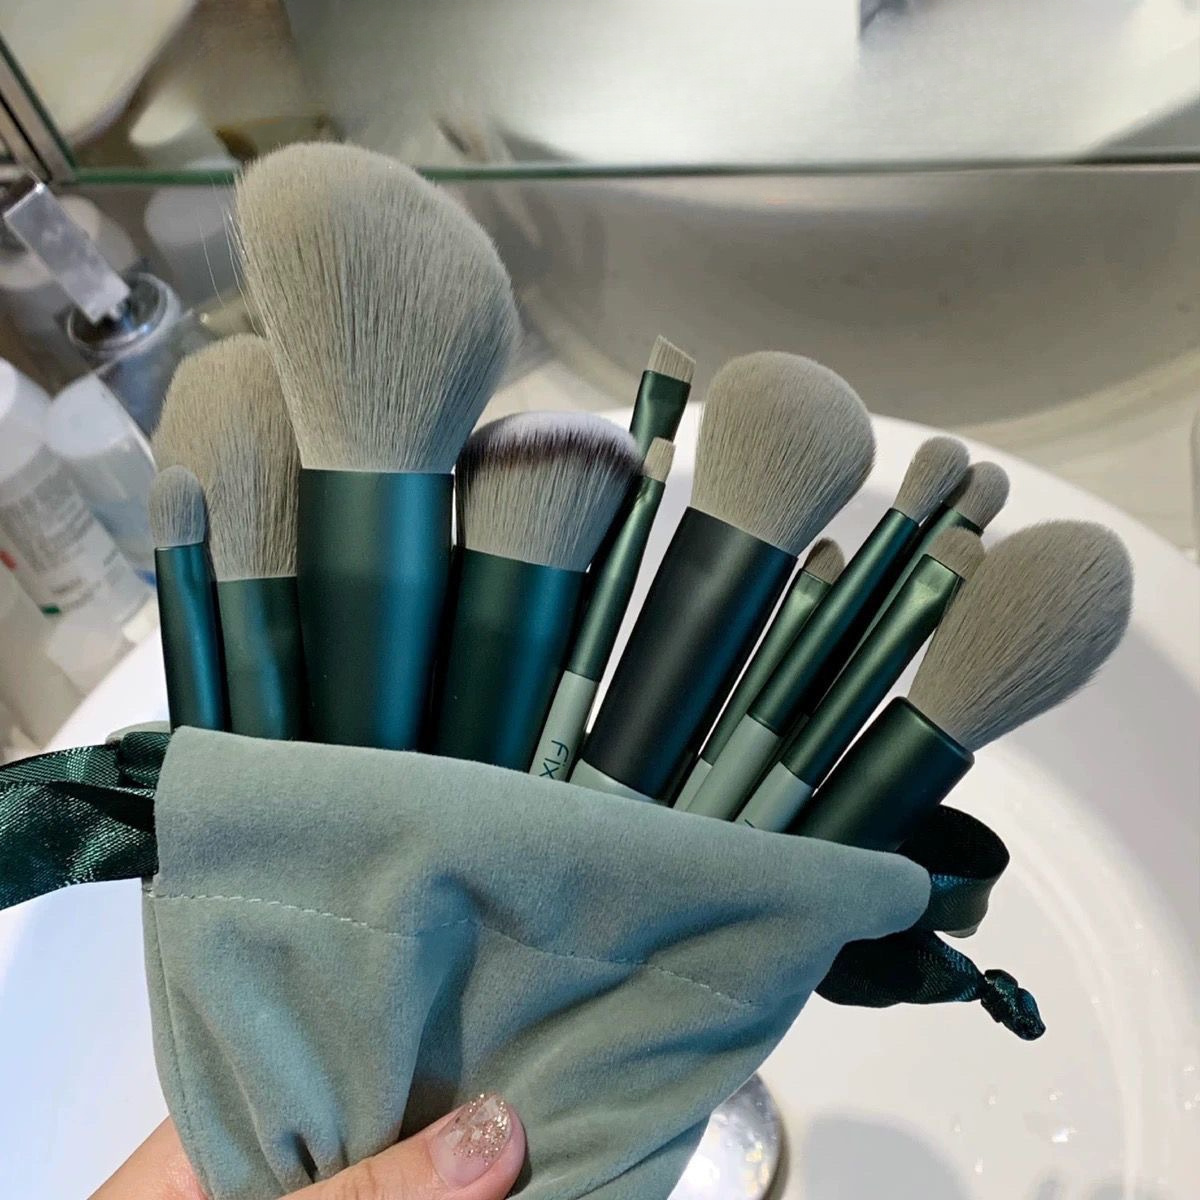 

expert Craftsmanship" 13-piece Professional Makeup Brush Set - Premium Kabuki Foundation & Multi-use Brushes For Flawless Blending, Concealing & Eyeshadow Application - Ideal For Beginners To Pros